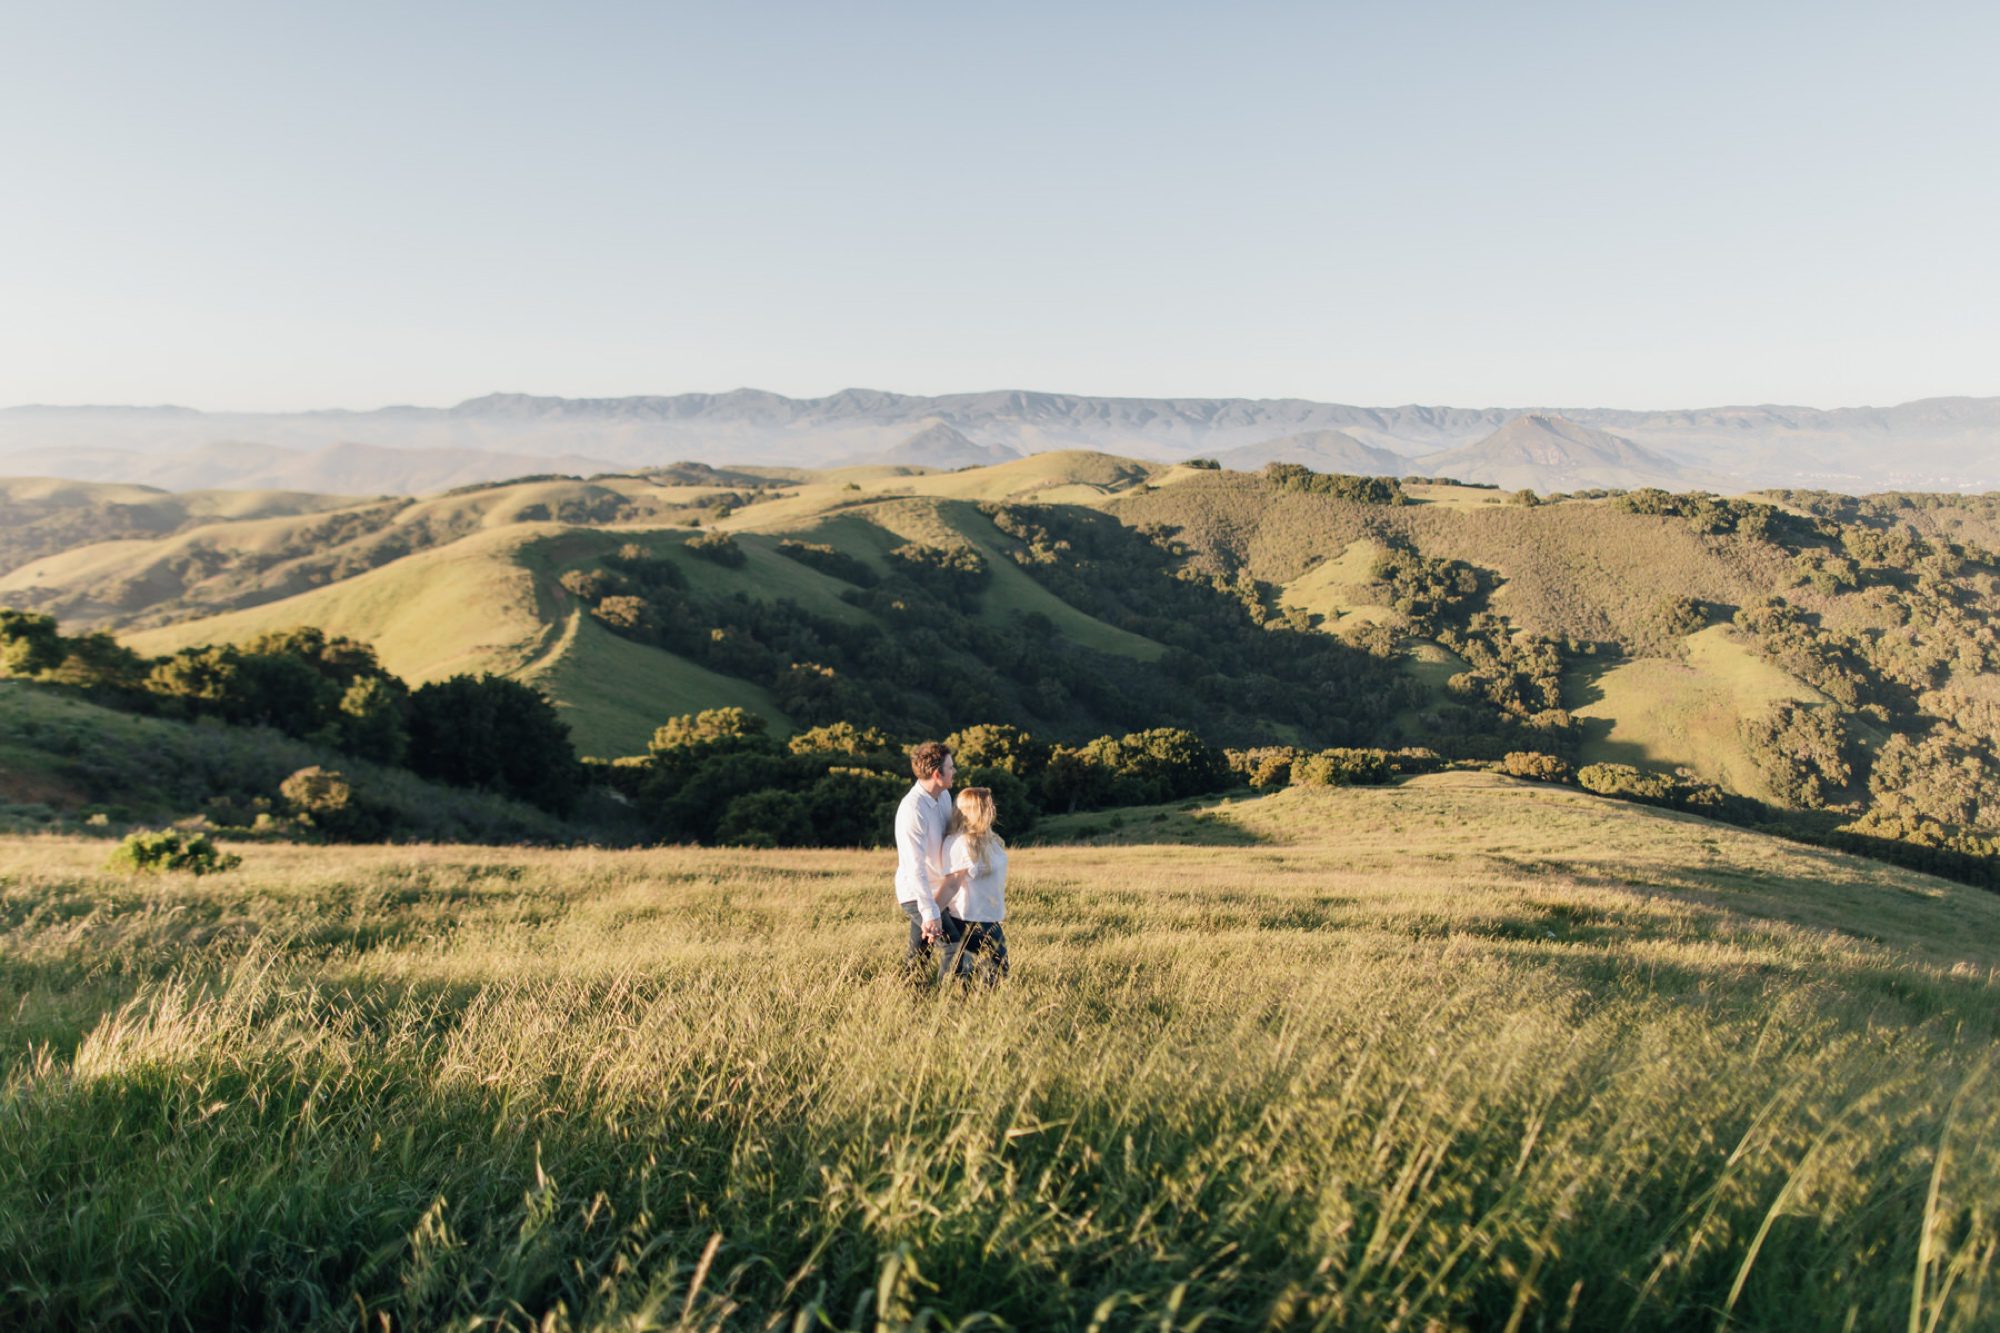 San Luis Obispo Engagement Session on Film at scenic Prefumo Canyon by wedding photographer Jessica Sofranko